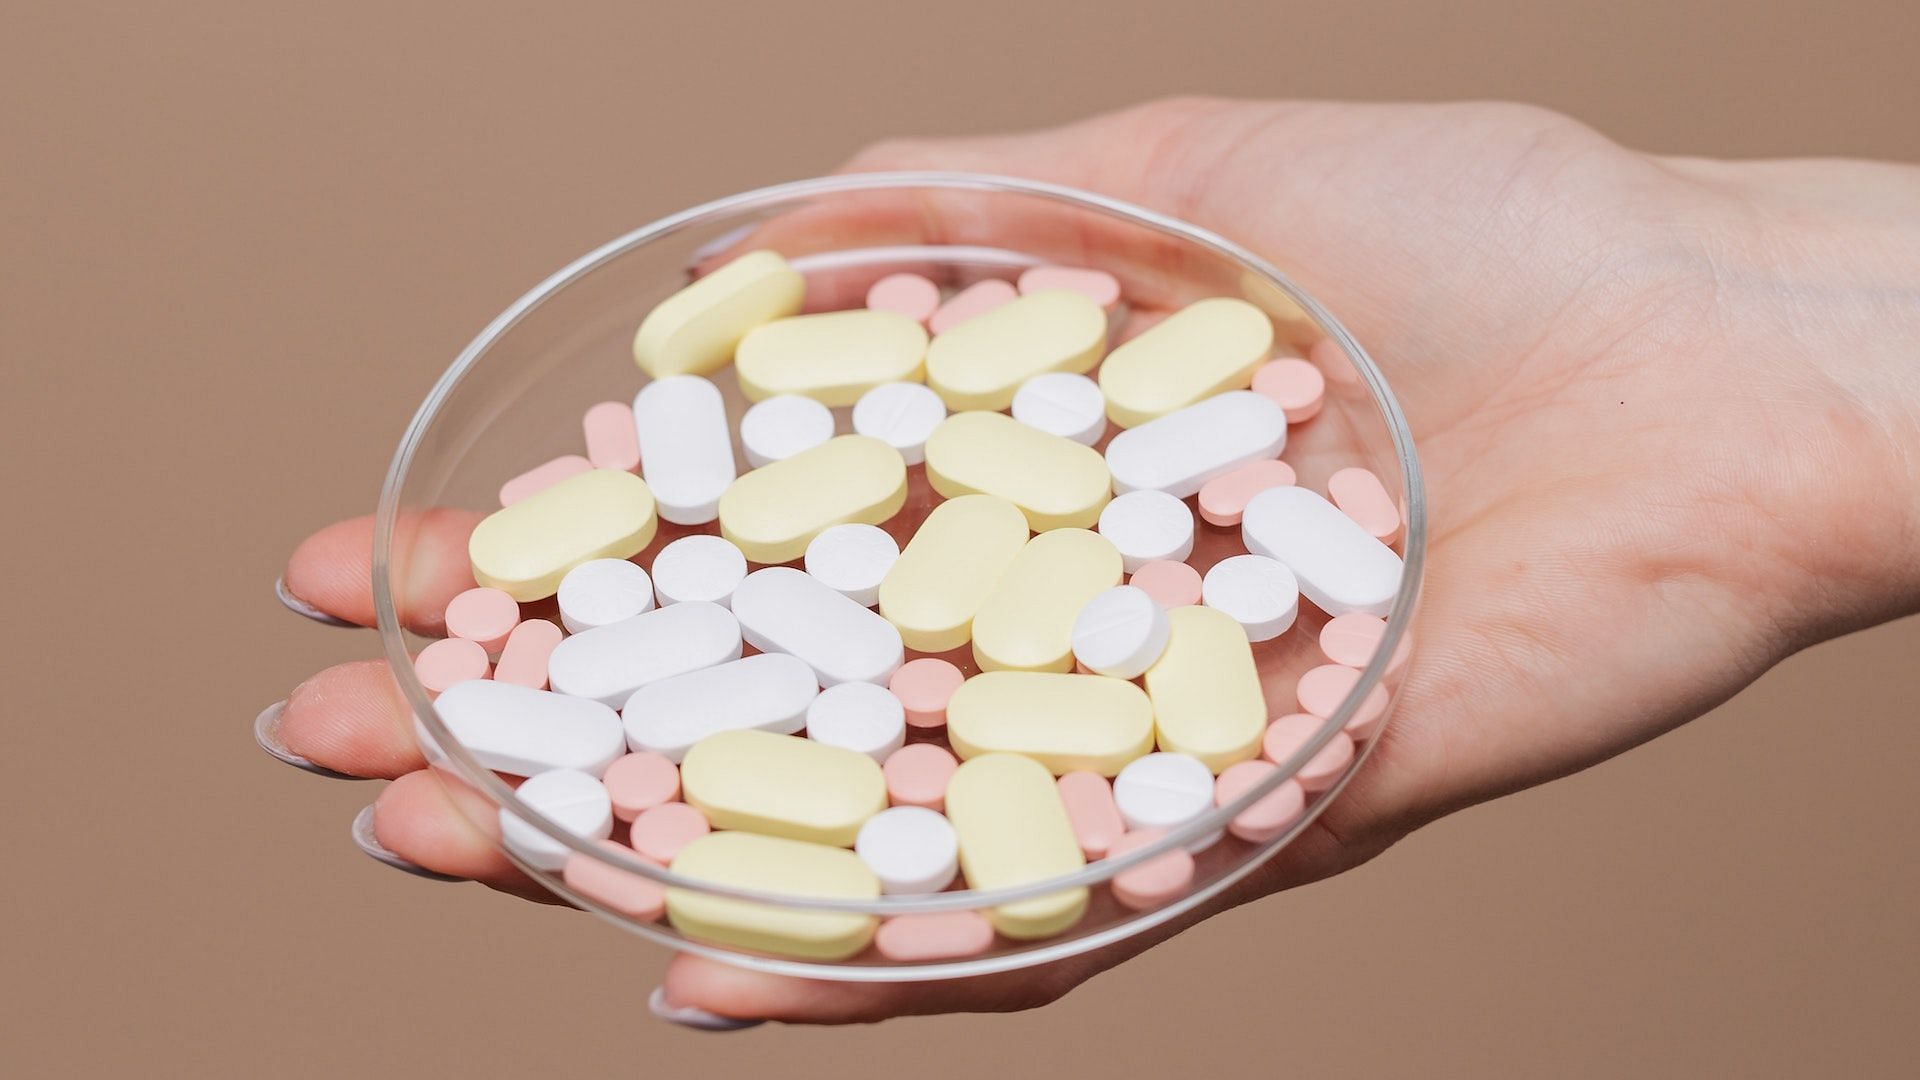 Are calcium supplements safe? Image via Pexels/Karolina Grabowska